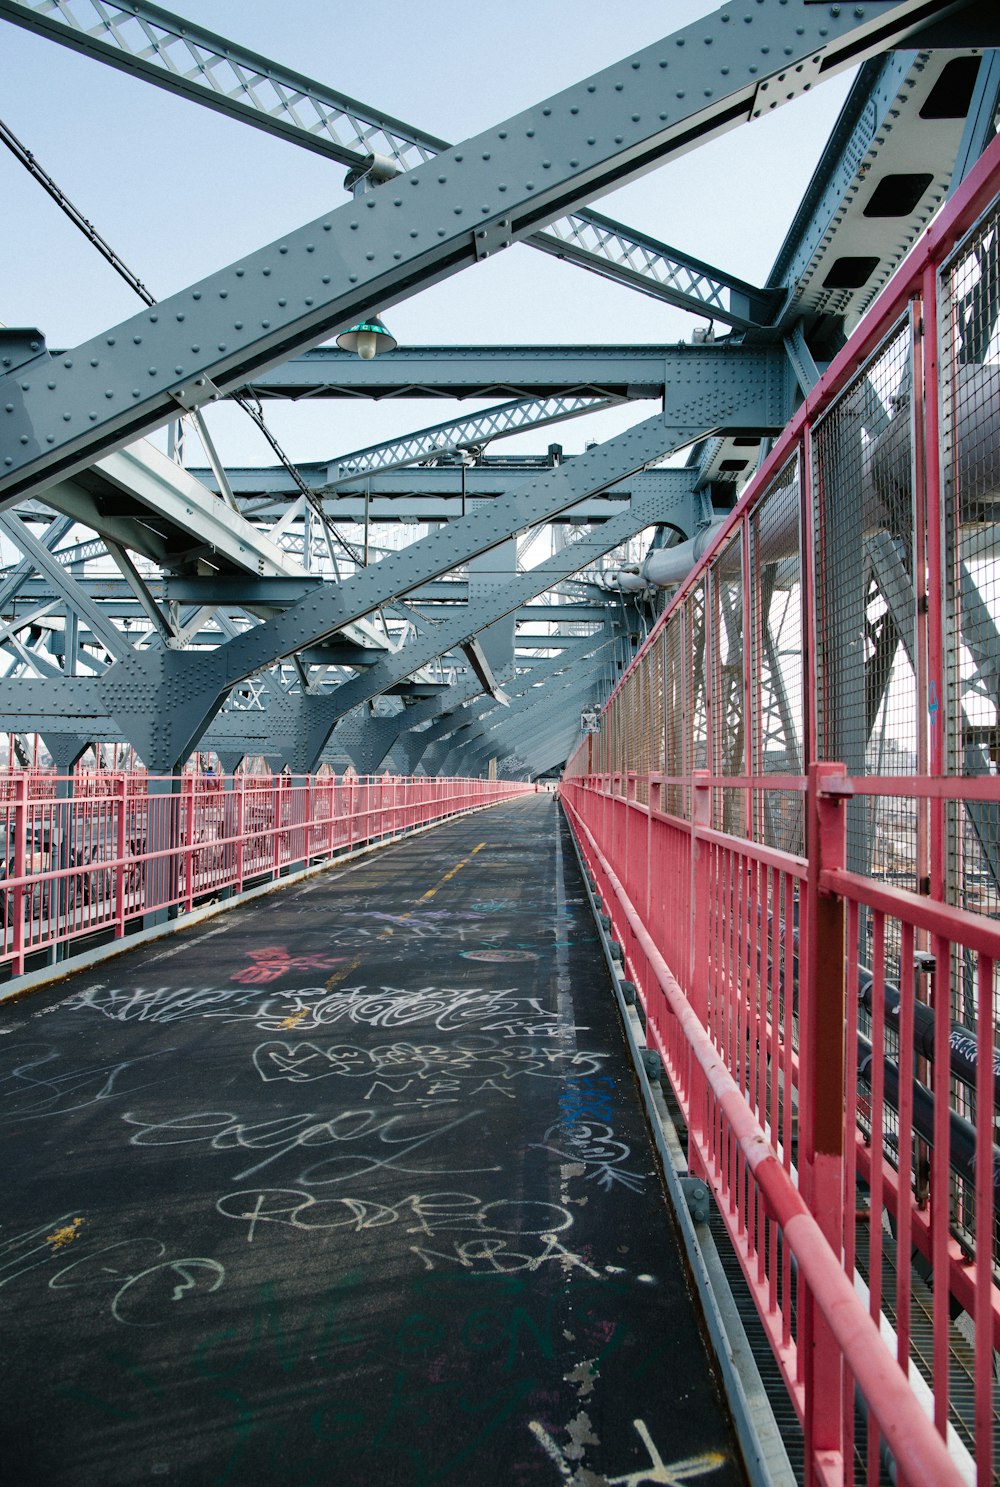 Williamsburg Bridge with red railings